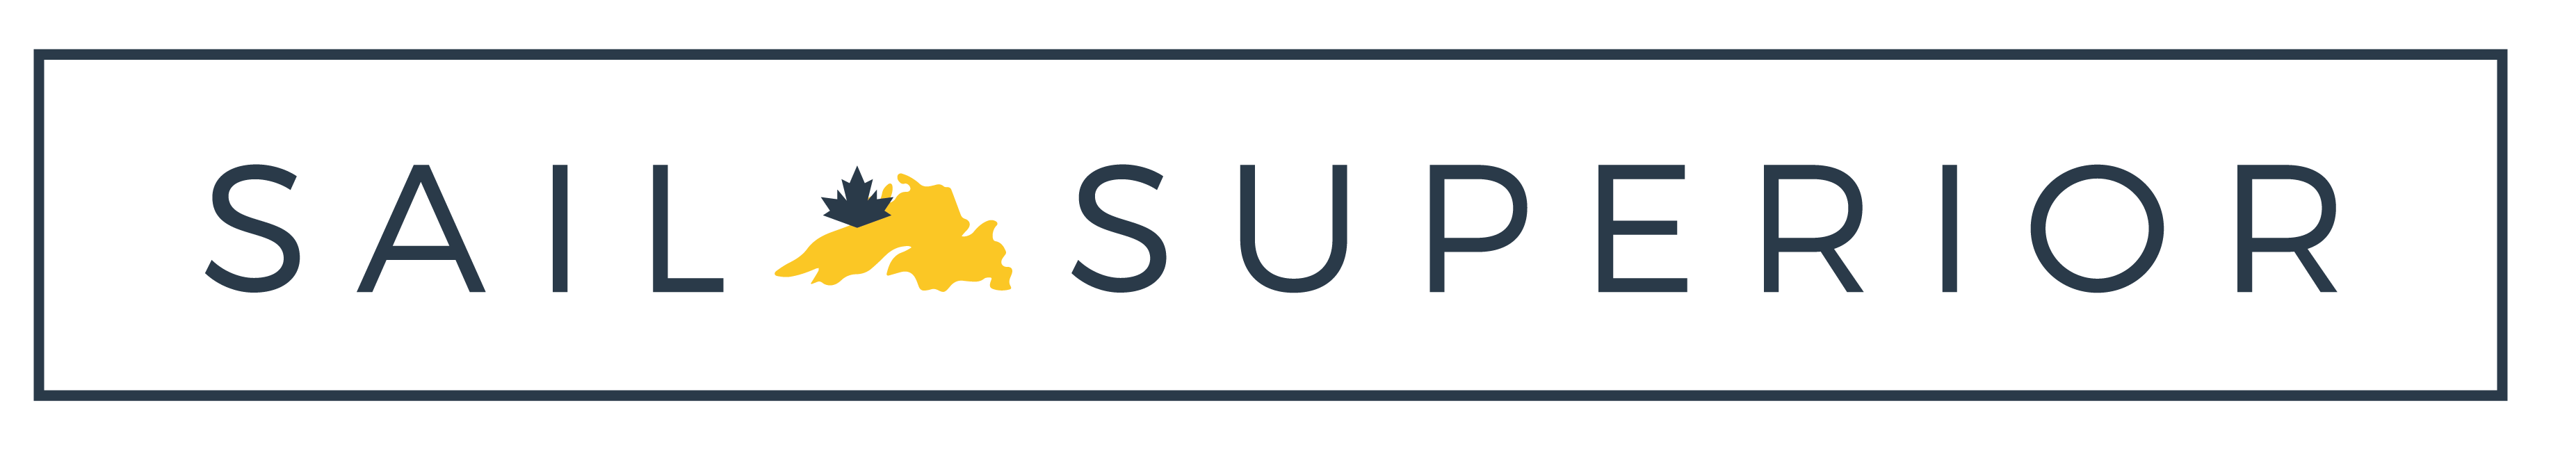 Sail Superior logo